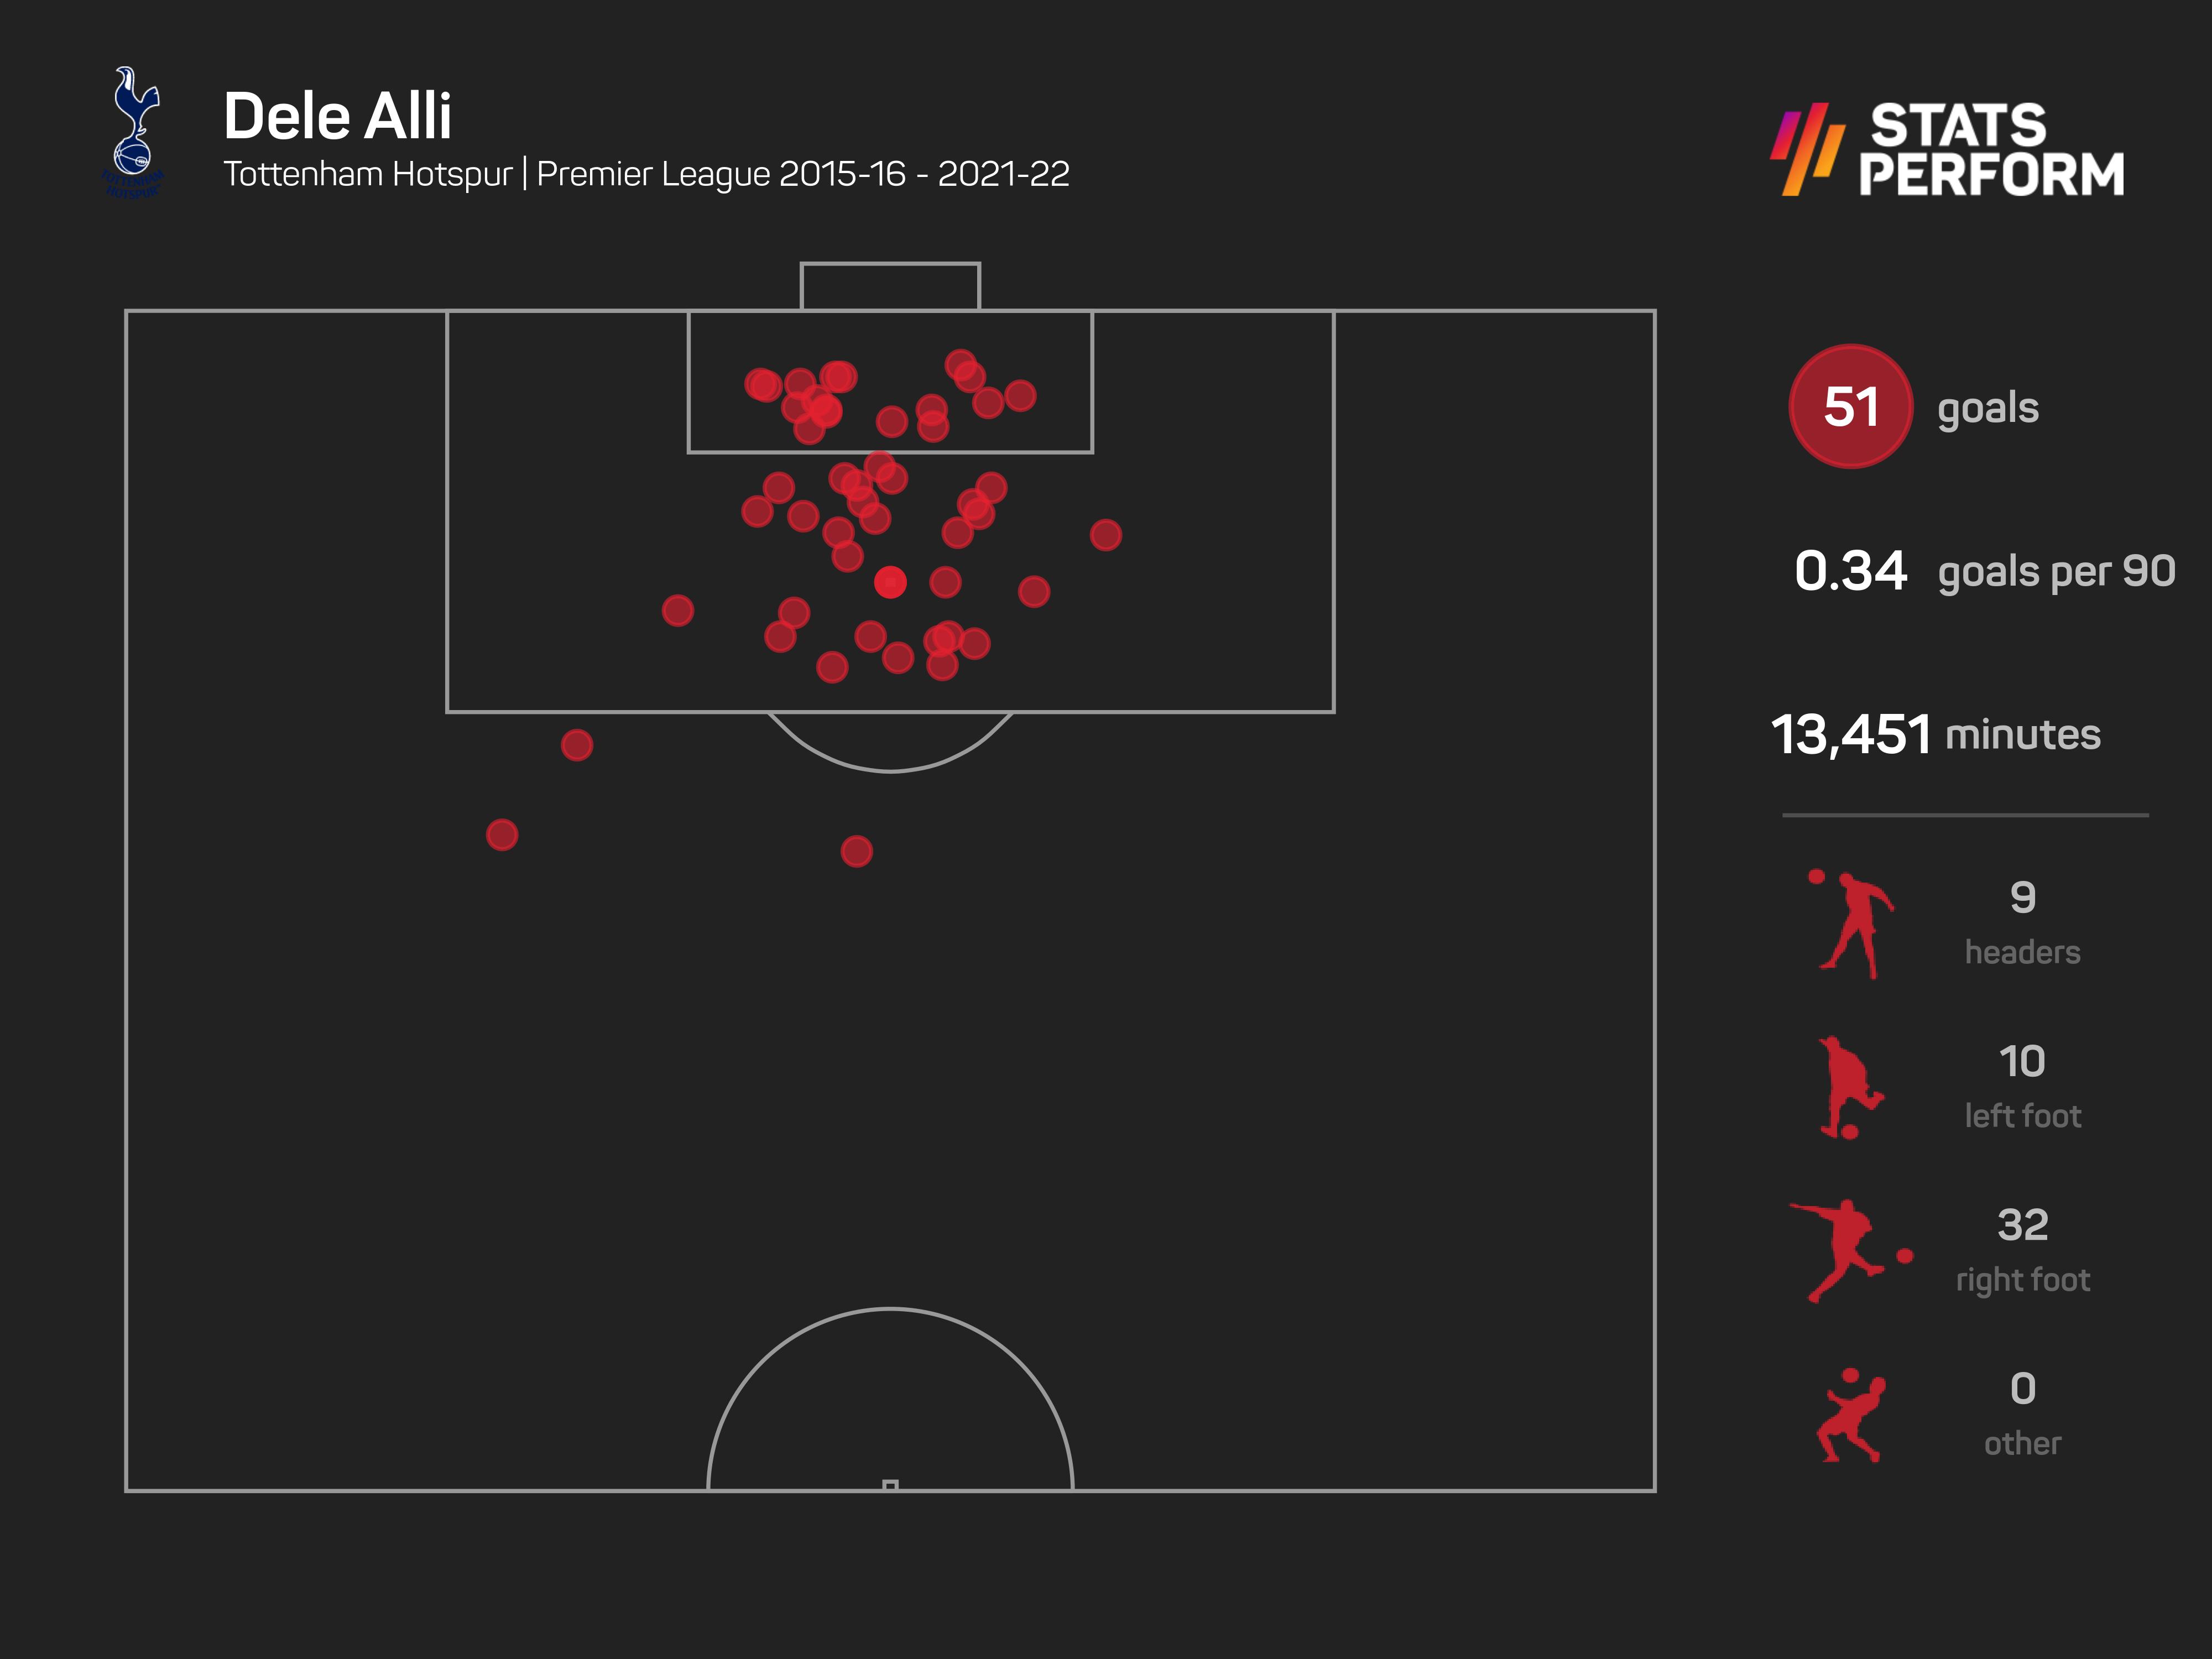 Dele Alli scored 51 Premier League goals for Tottenham